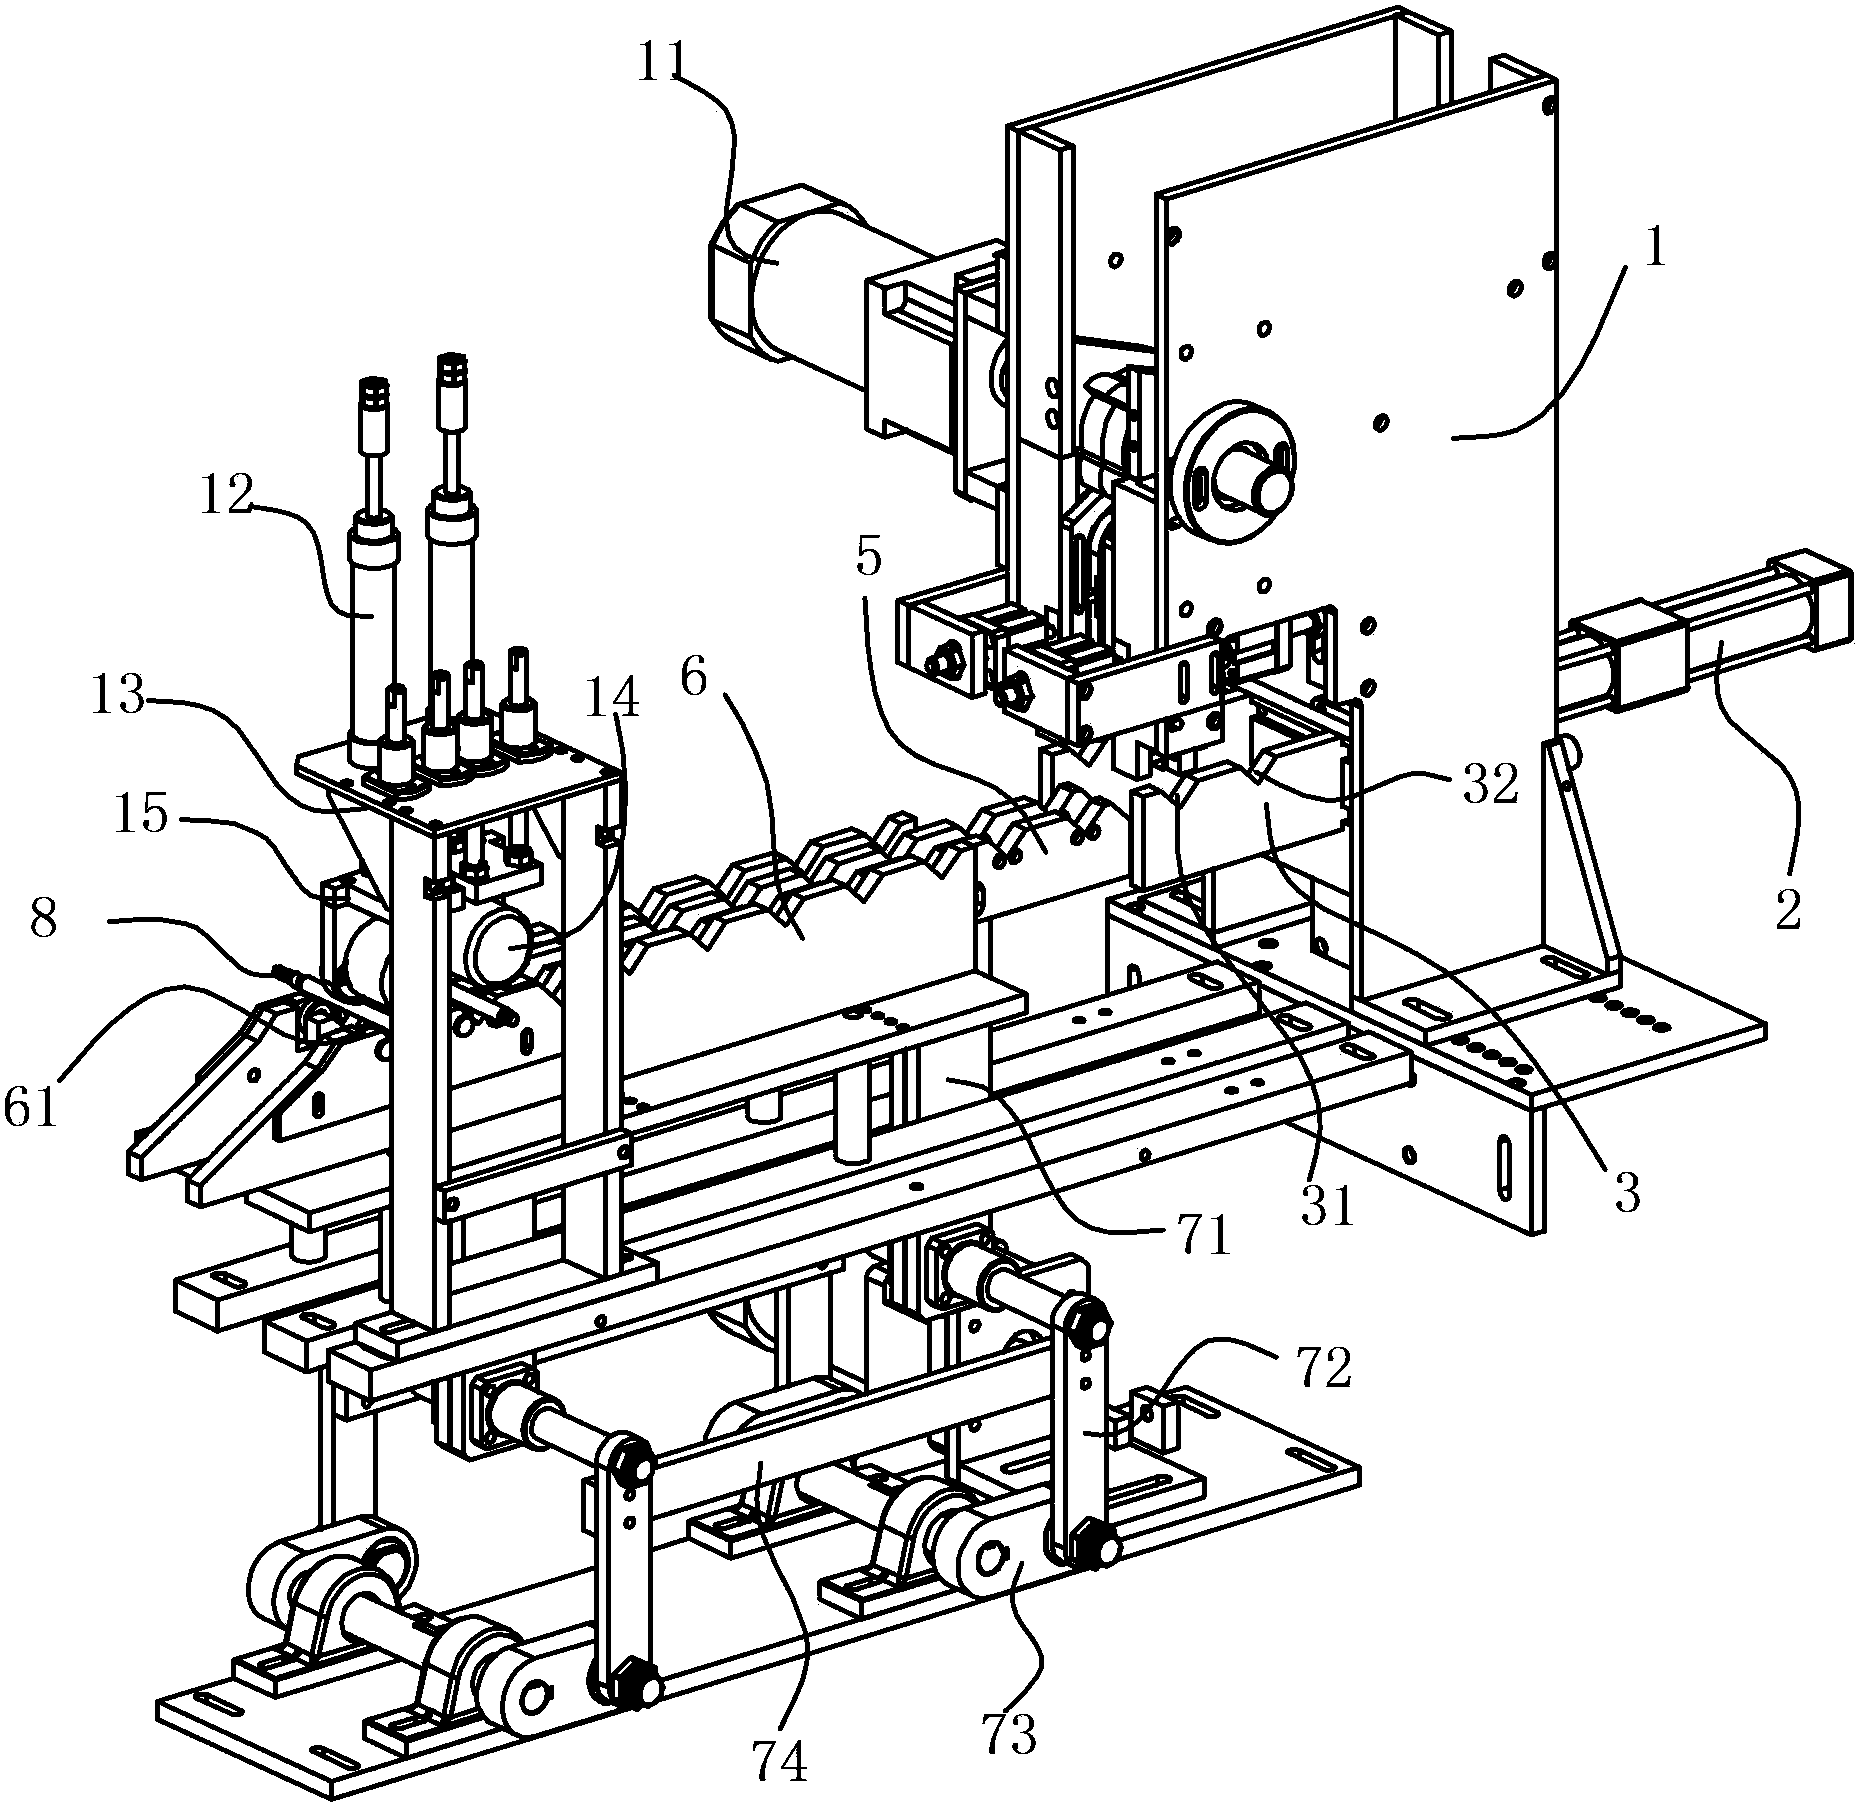 Motor shaft quenching equipment